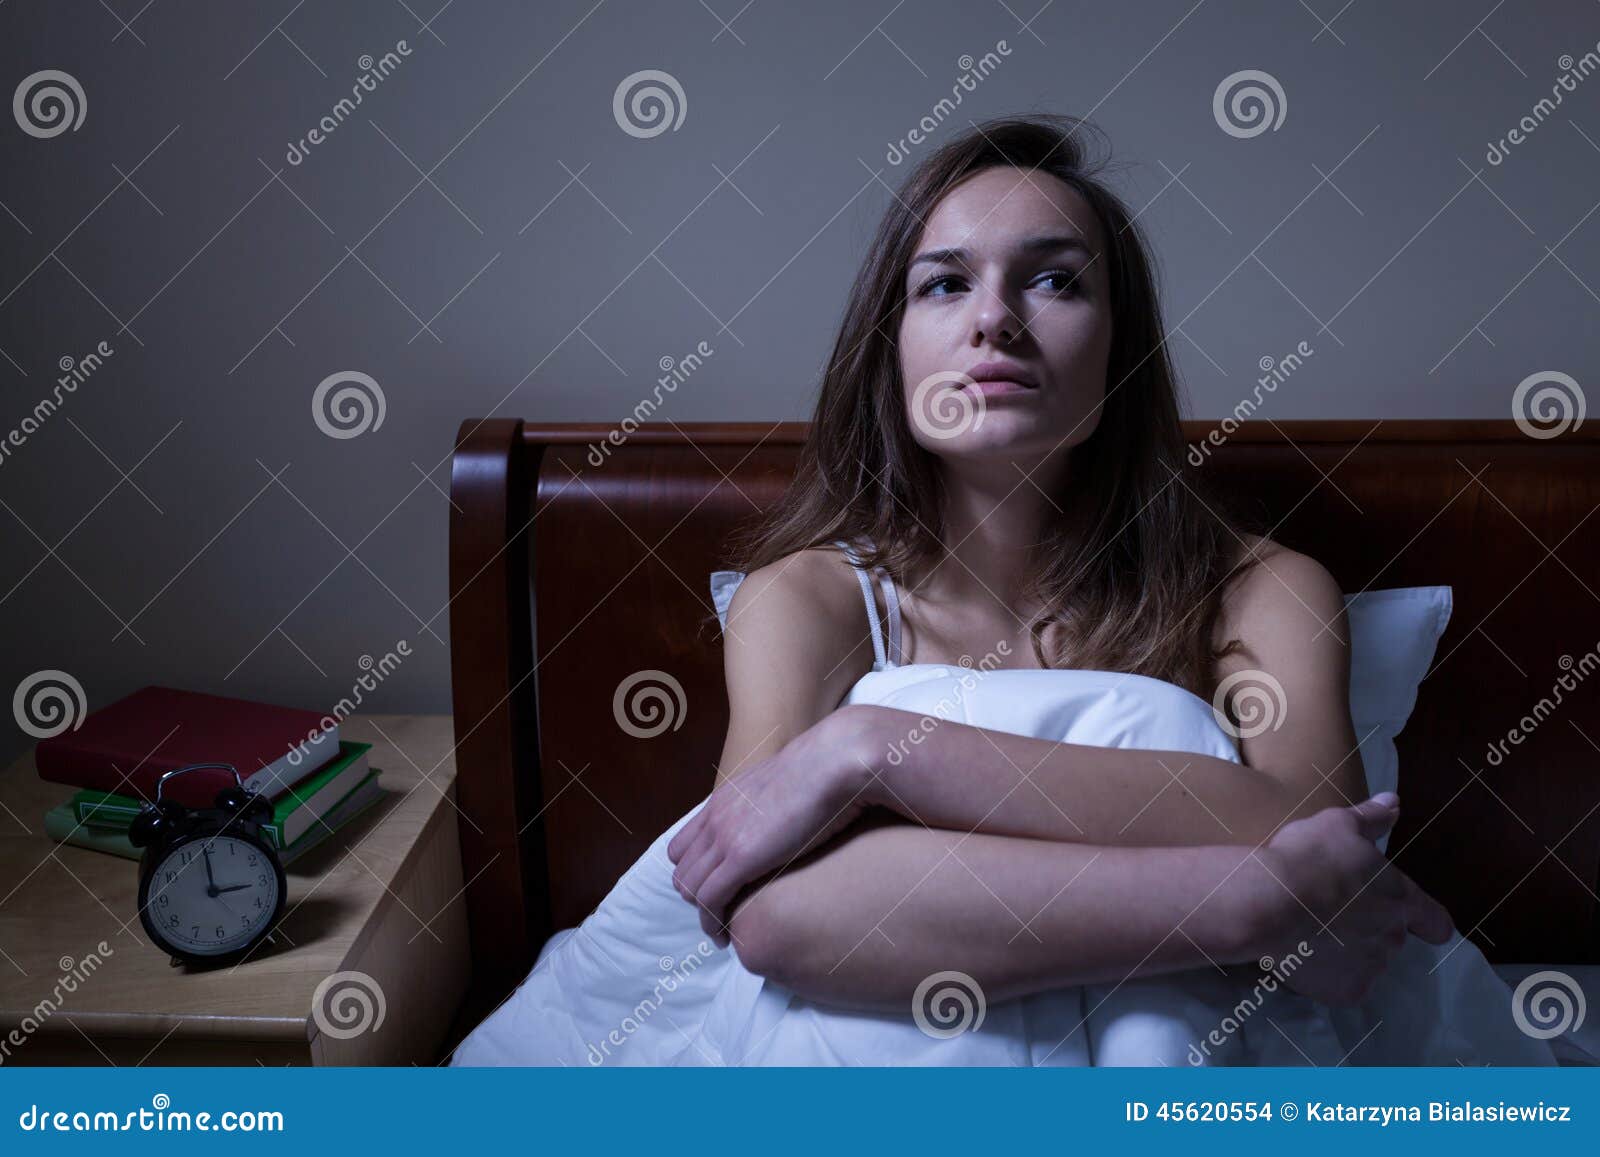 pensive woman stying sleepless at night